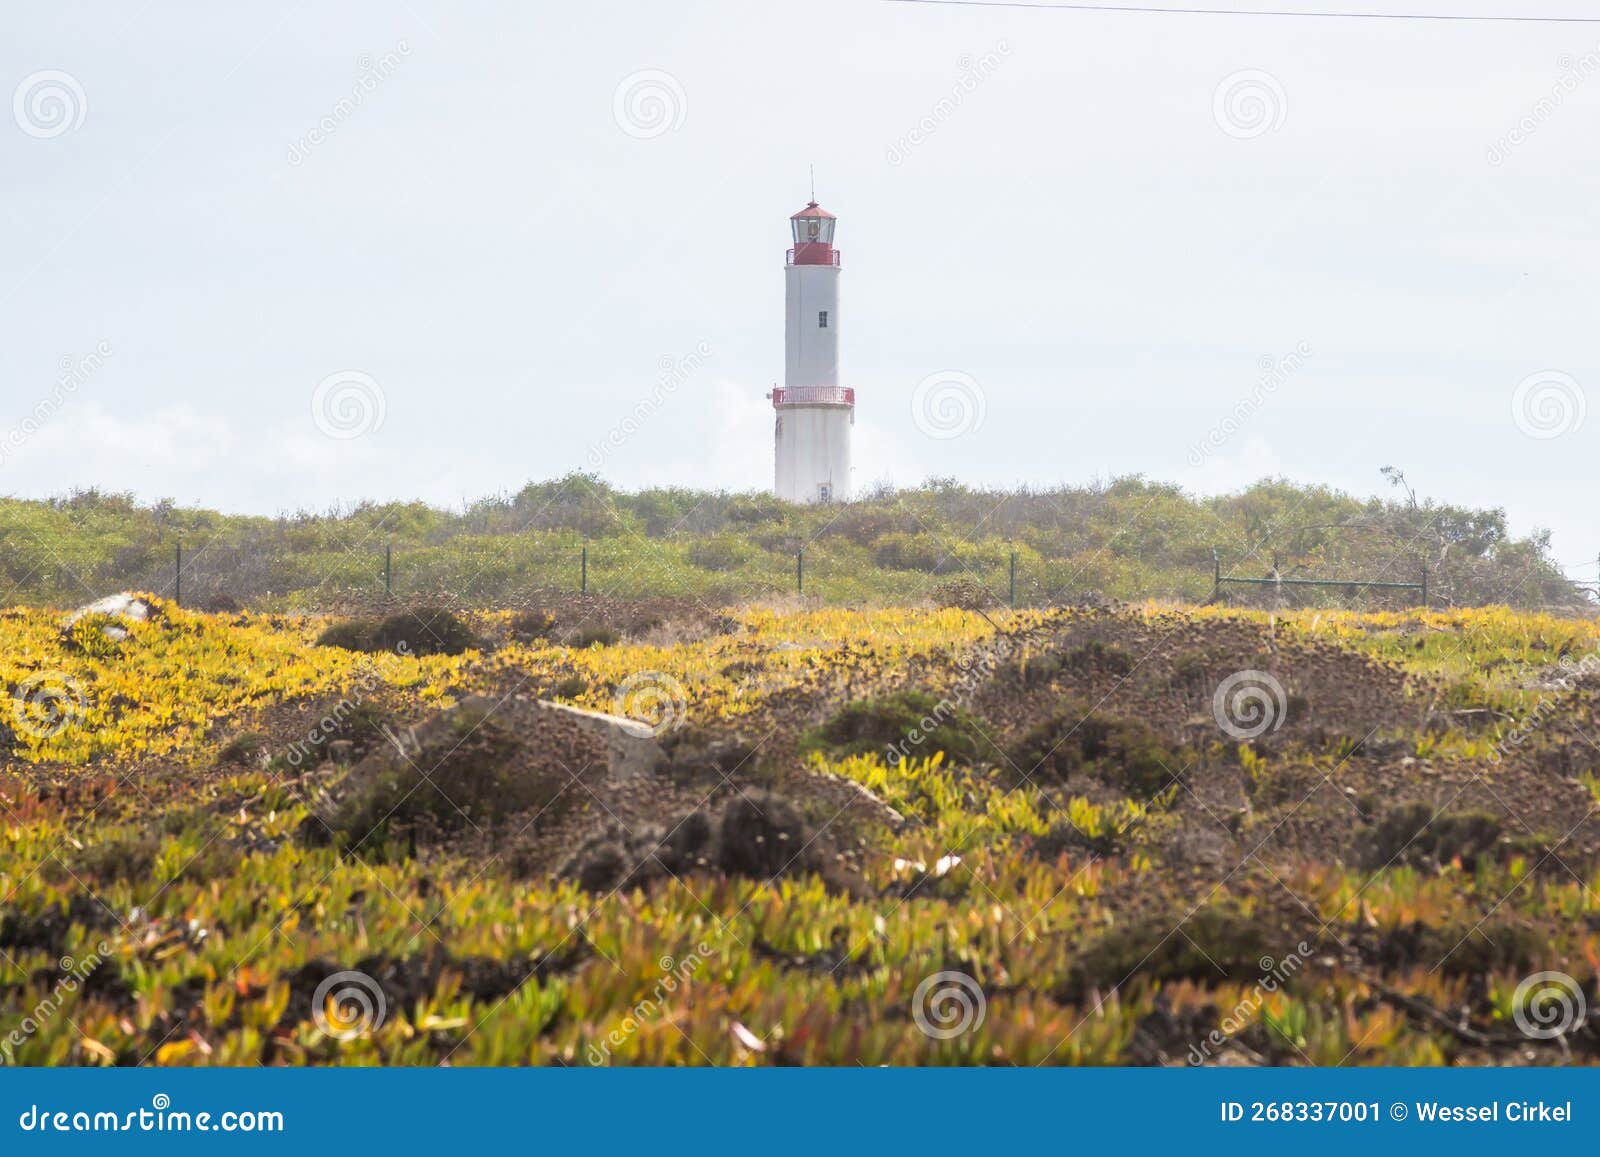 sines lighthouse in a flowering landscape, portugal